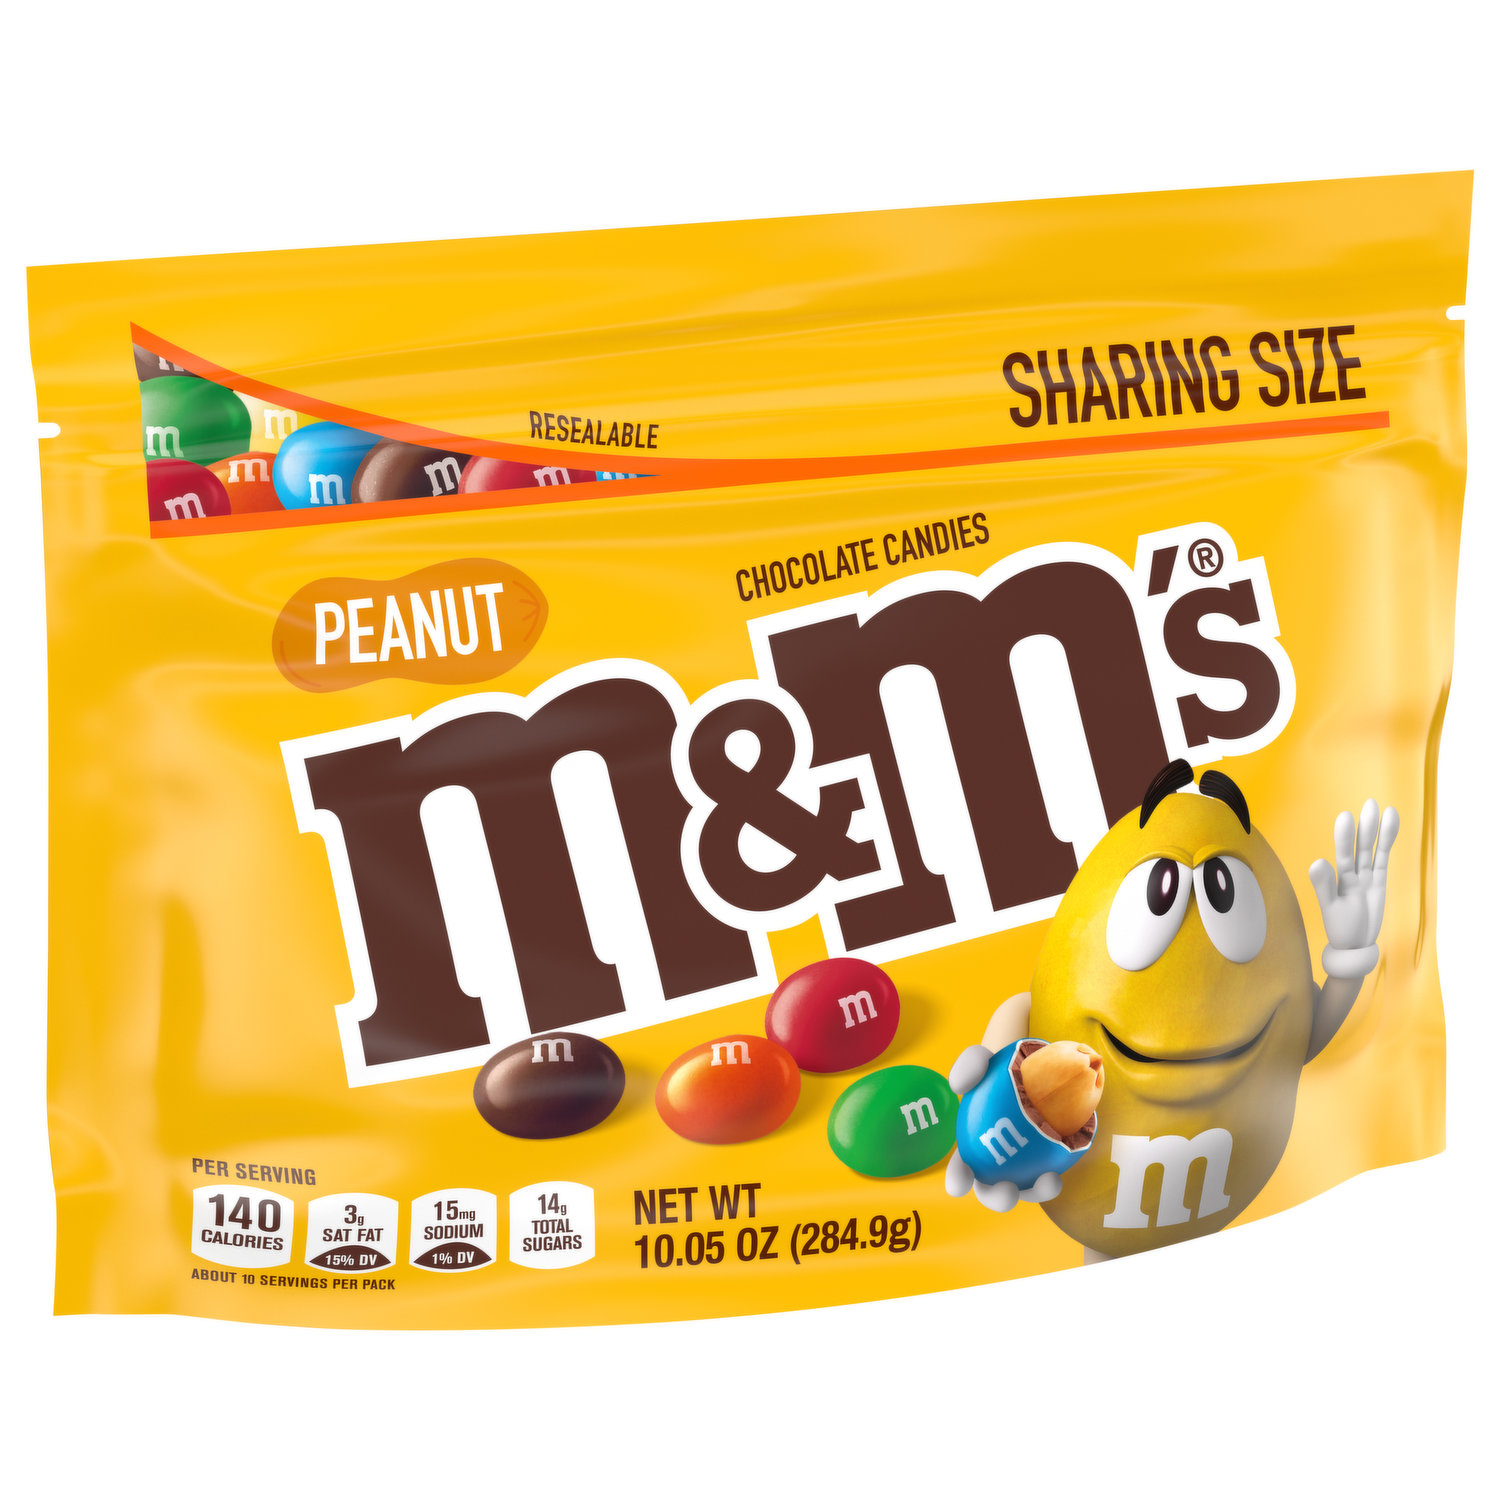 M&M'S, Peanut Milk Chocolate Candies, Sharing Bag, 400g